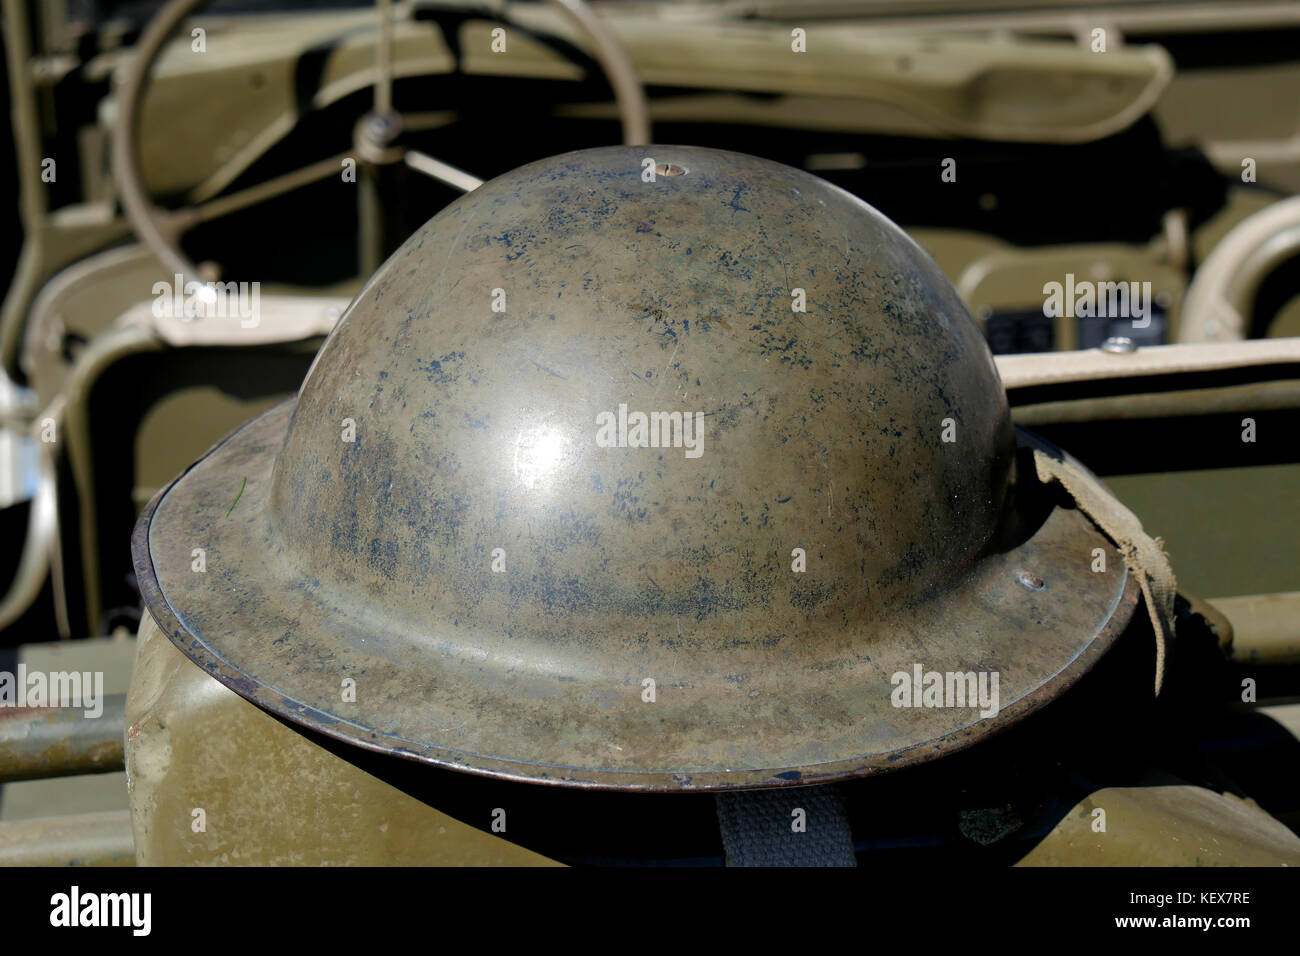 a british helmet of World War II on the jeep Stock Photo